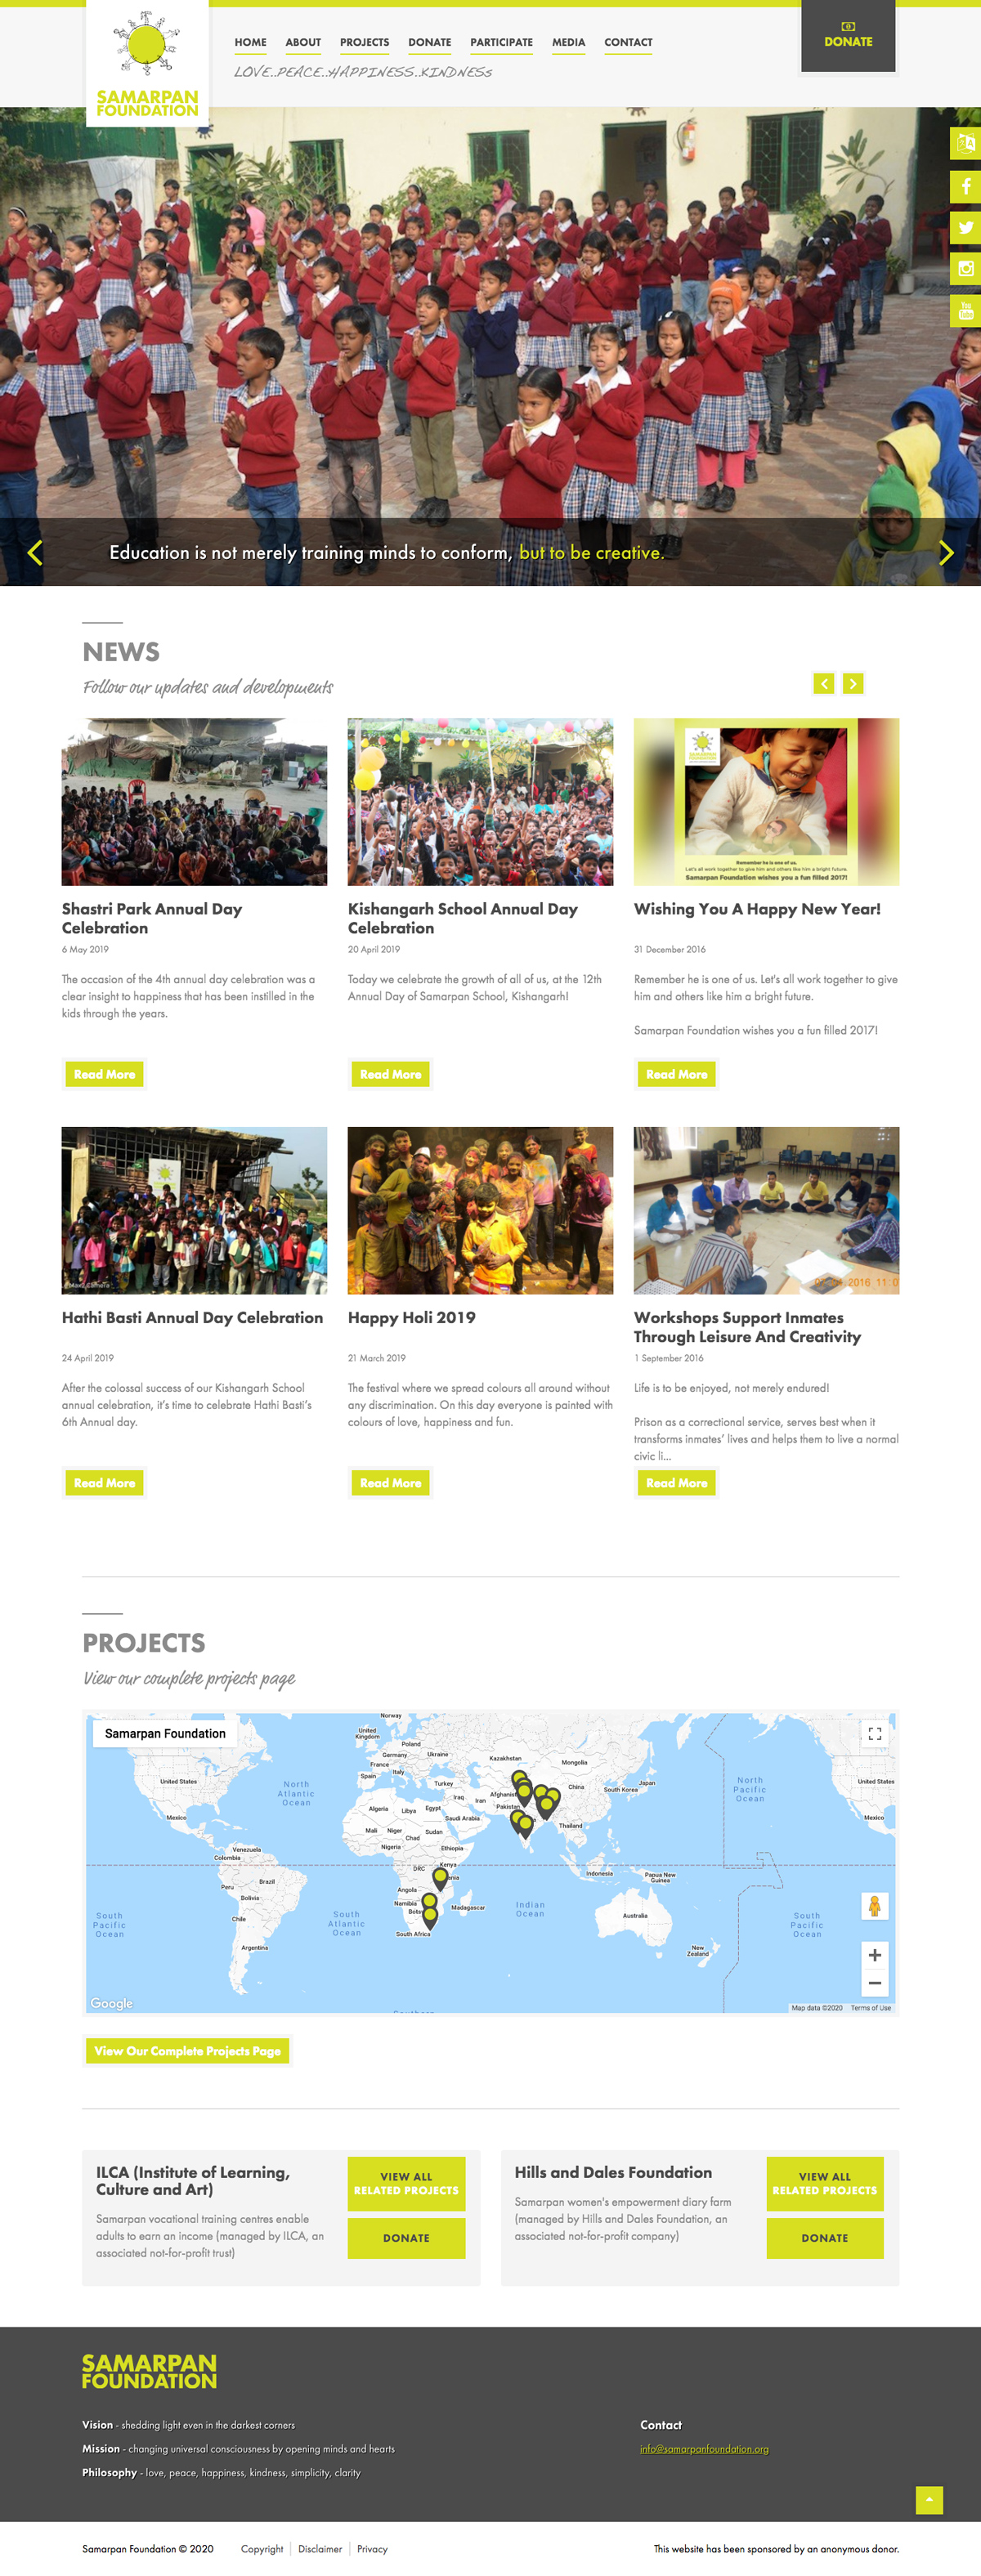 Samarpan Foundation Website